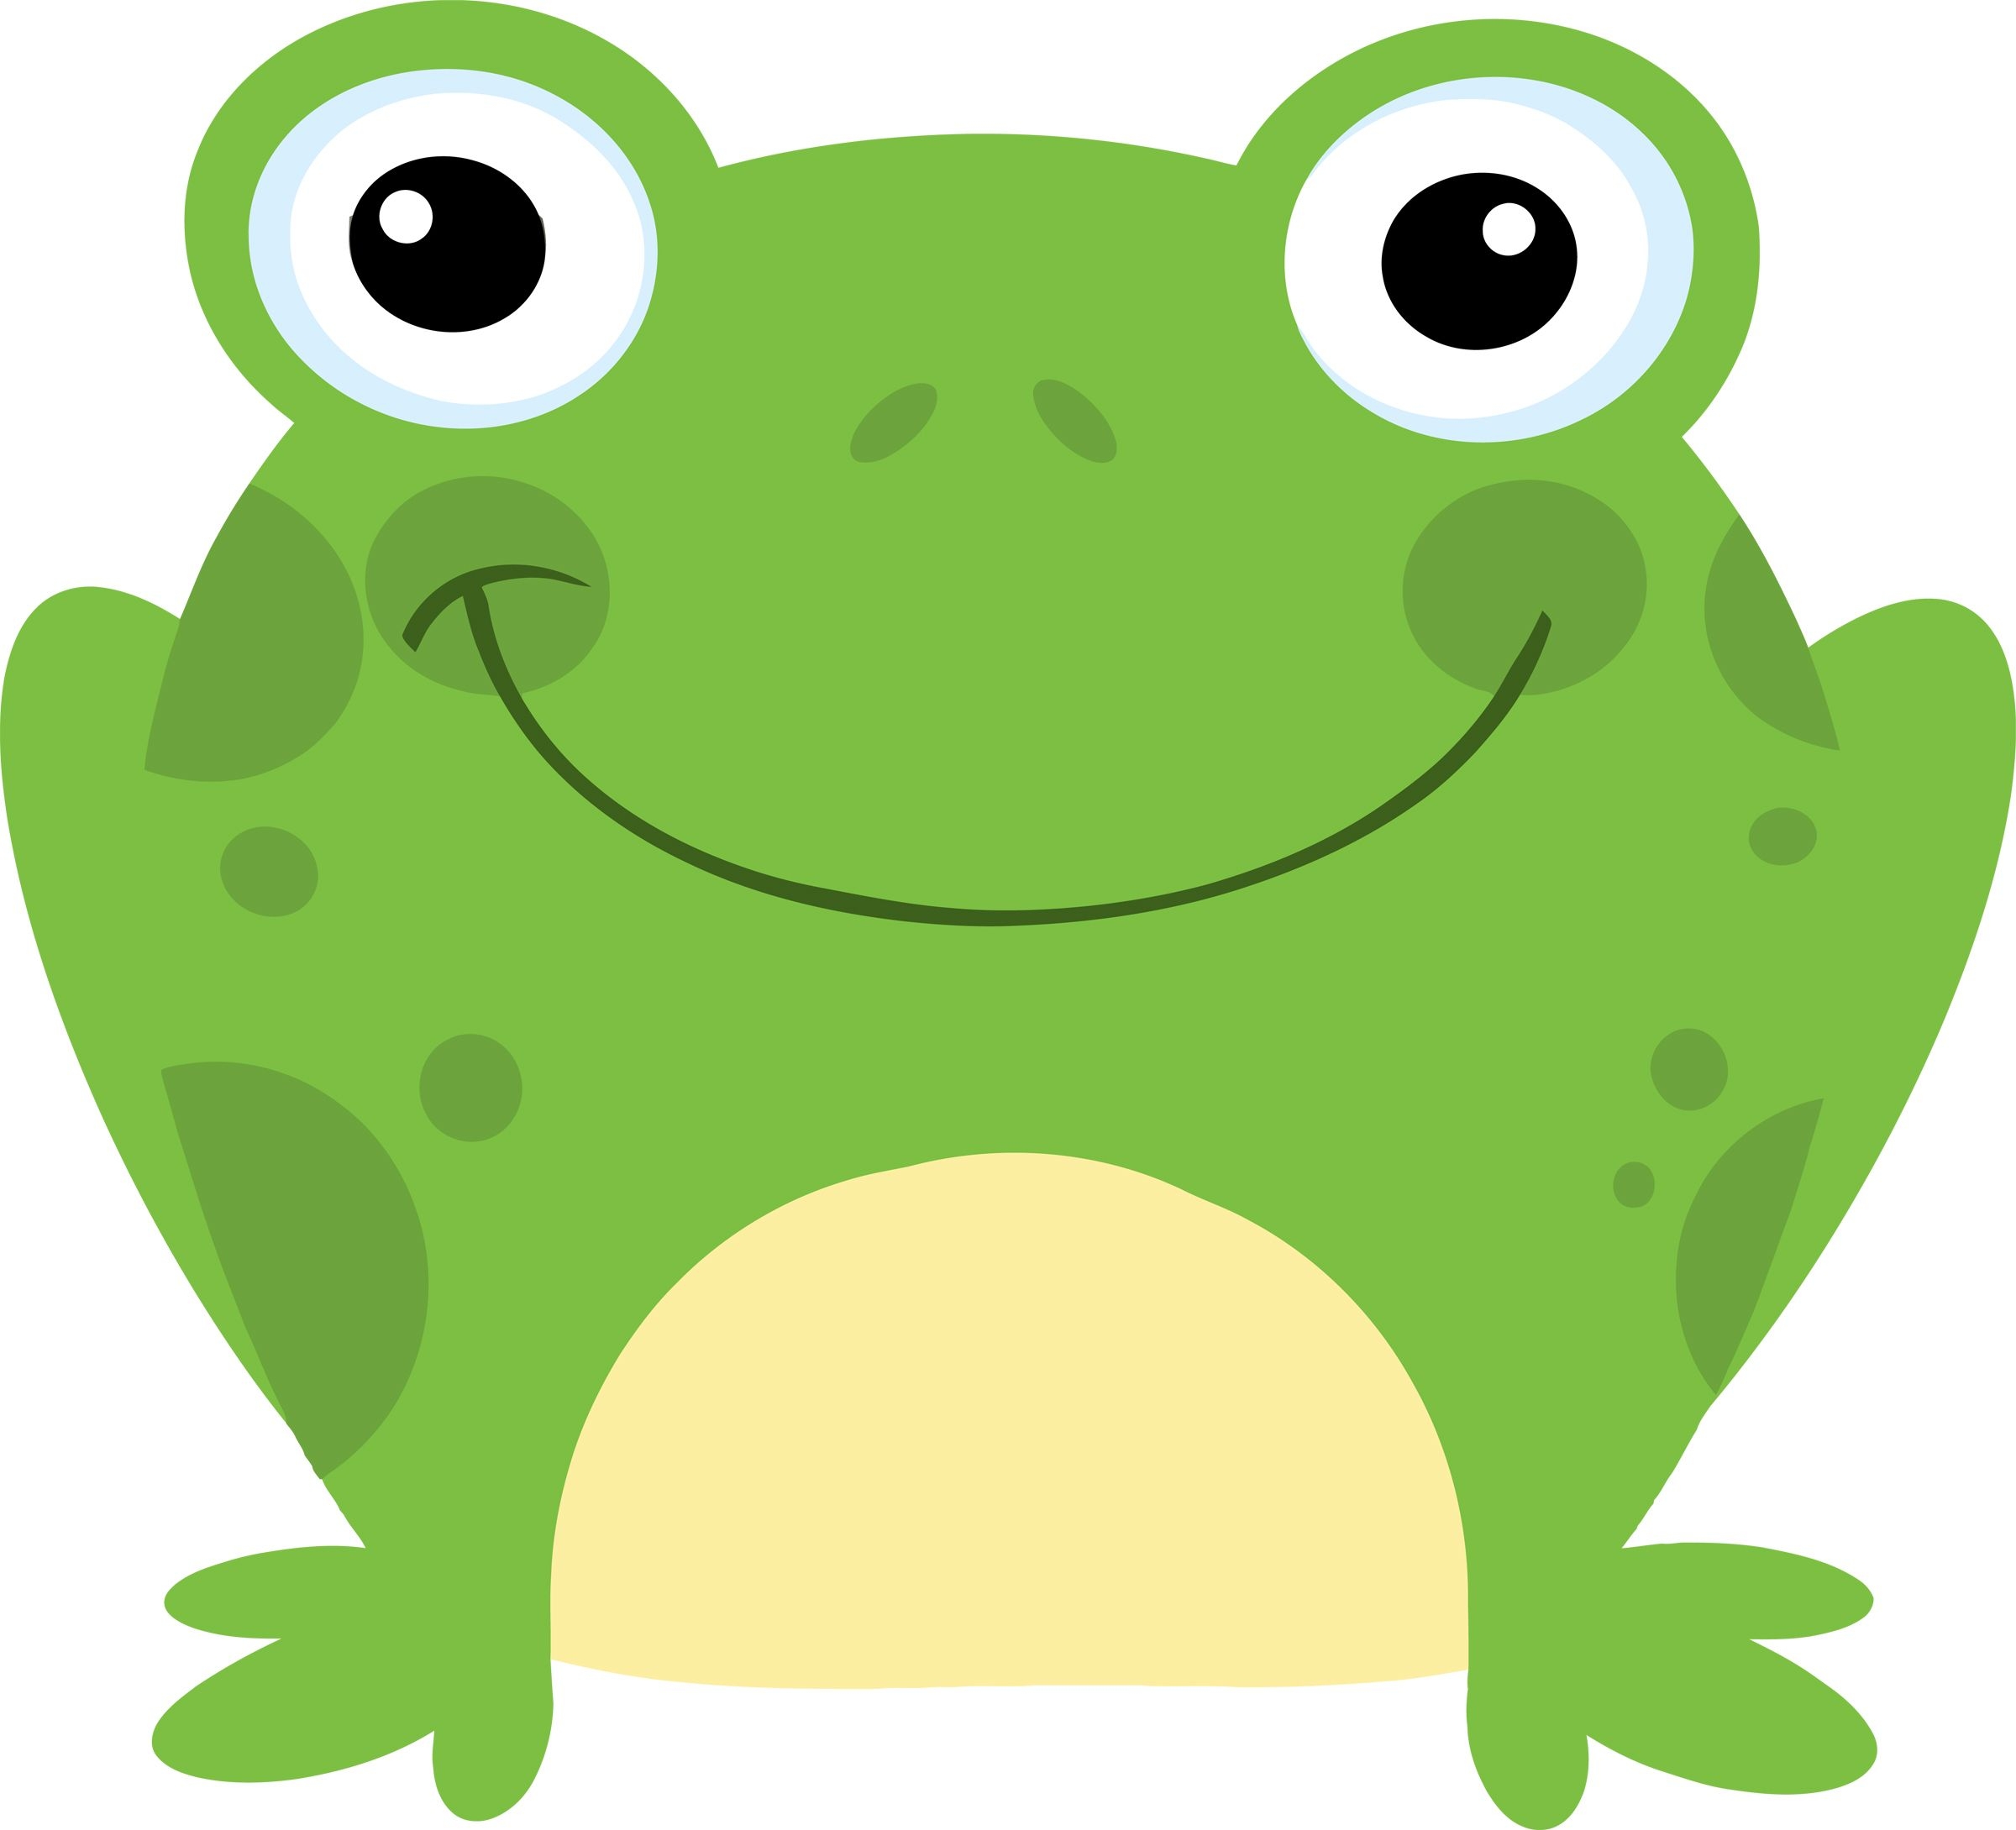 Elephant frog. Морда лягушки. Лягушки мультяшные. Голова лягушки. Лягушка с открытым ртом для детей.